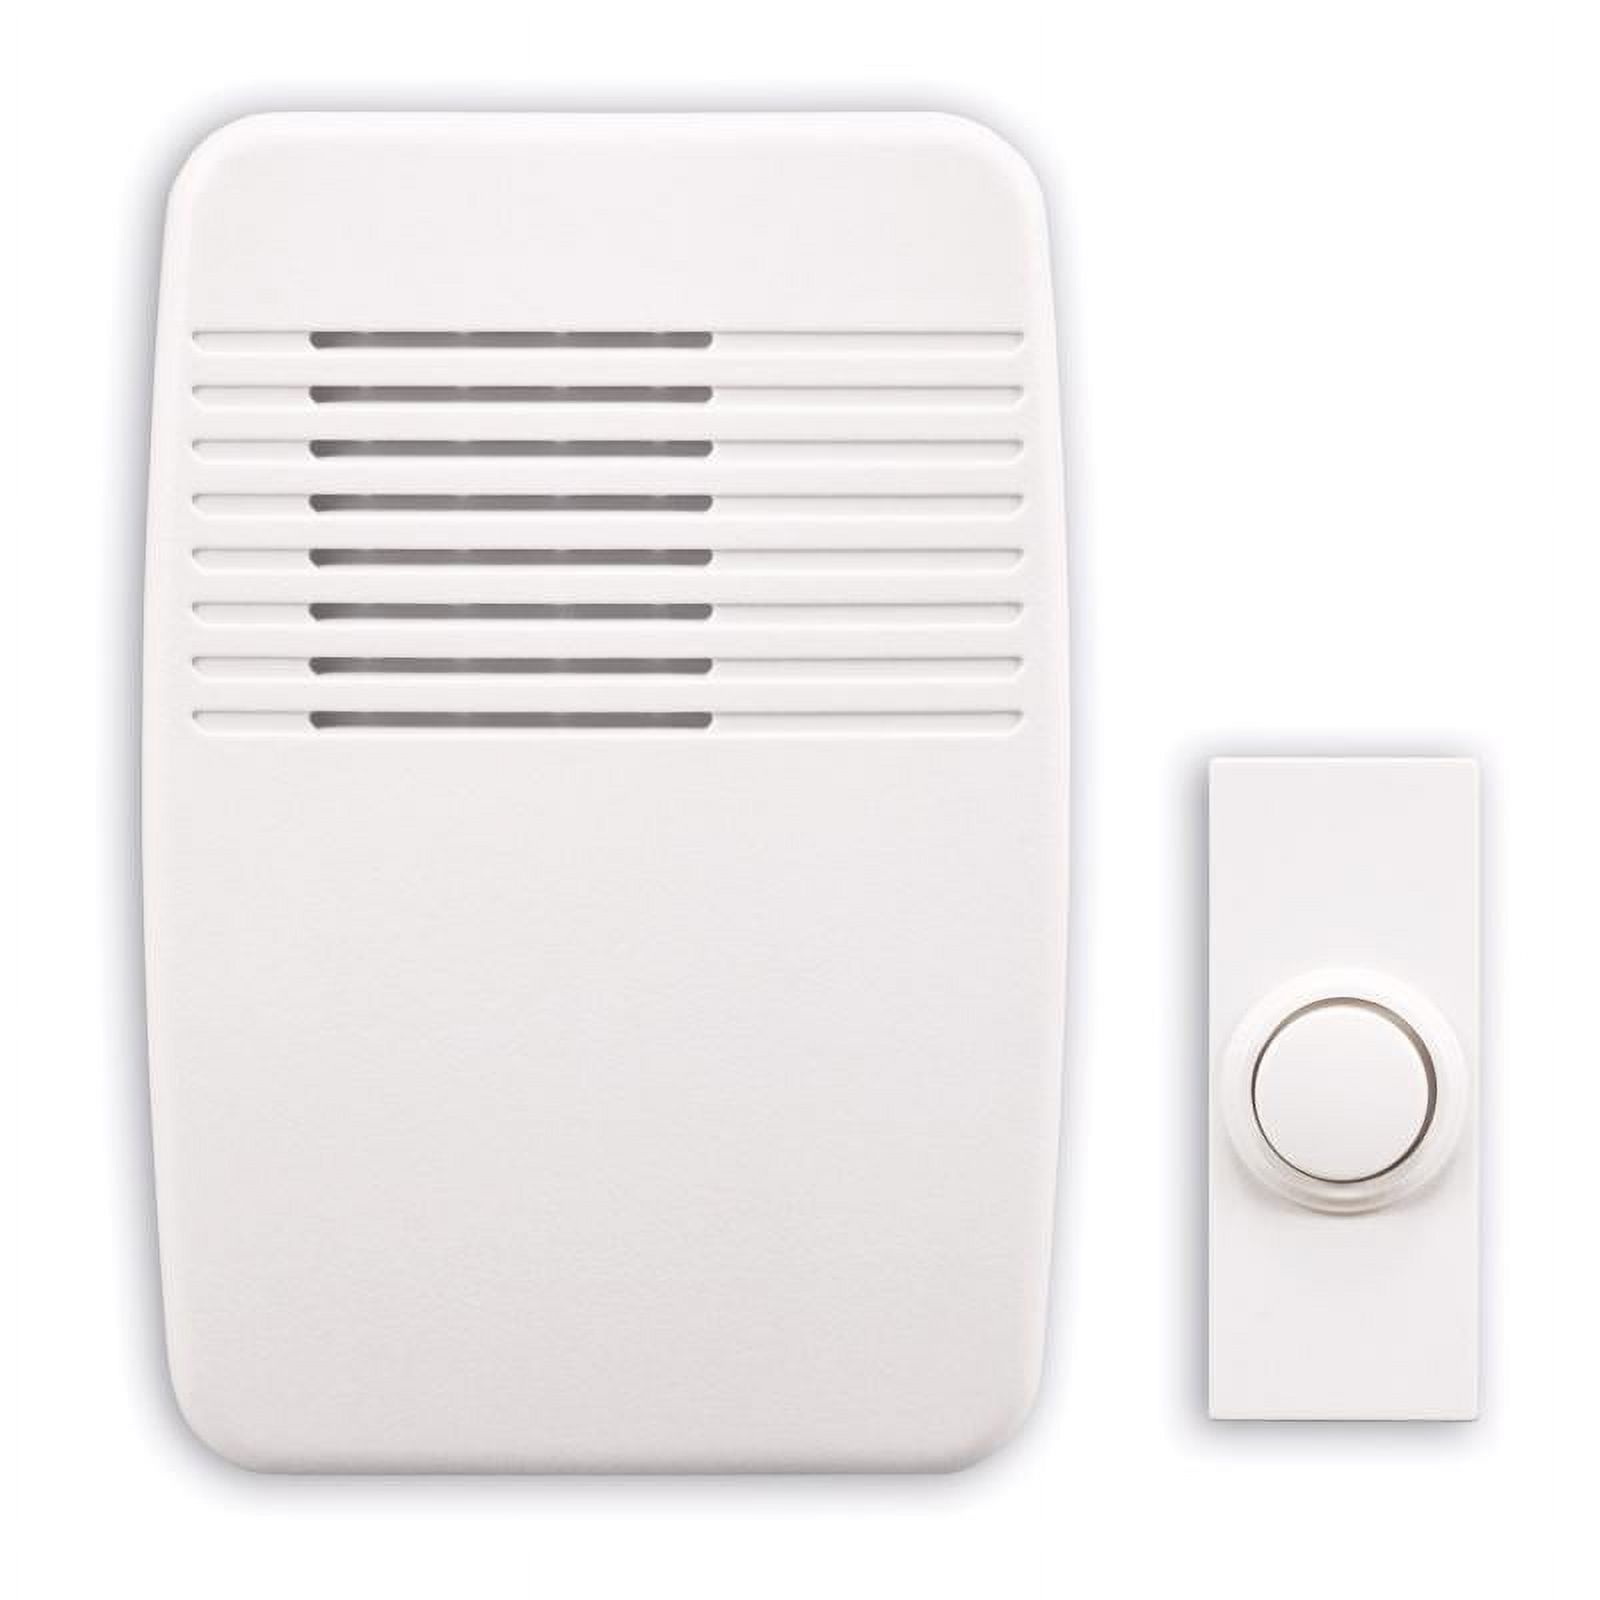 Heath Zenith White Plastic Wireless Door Chime Kit - image 1 of 7